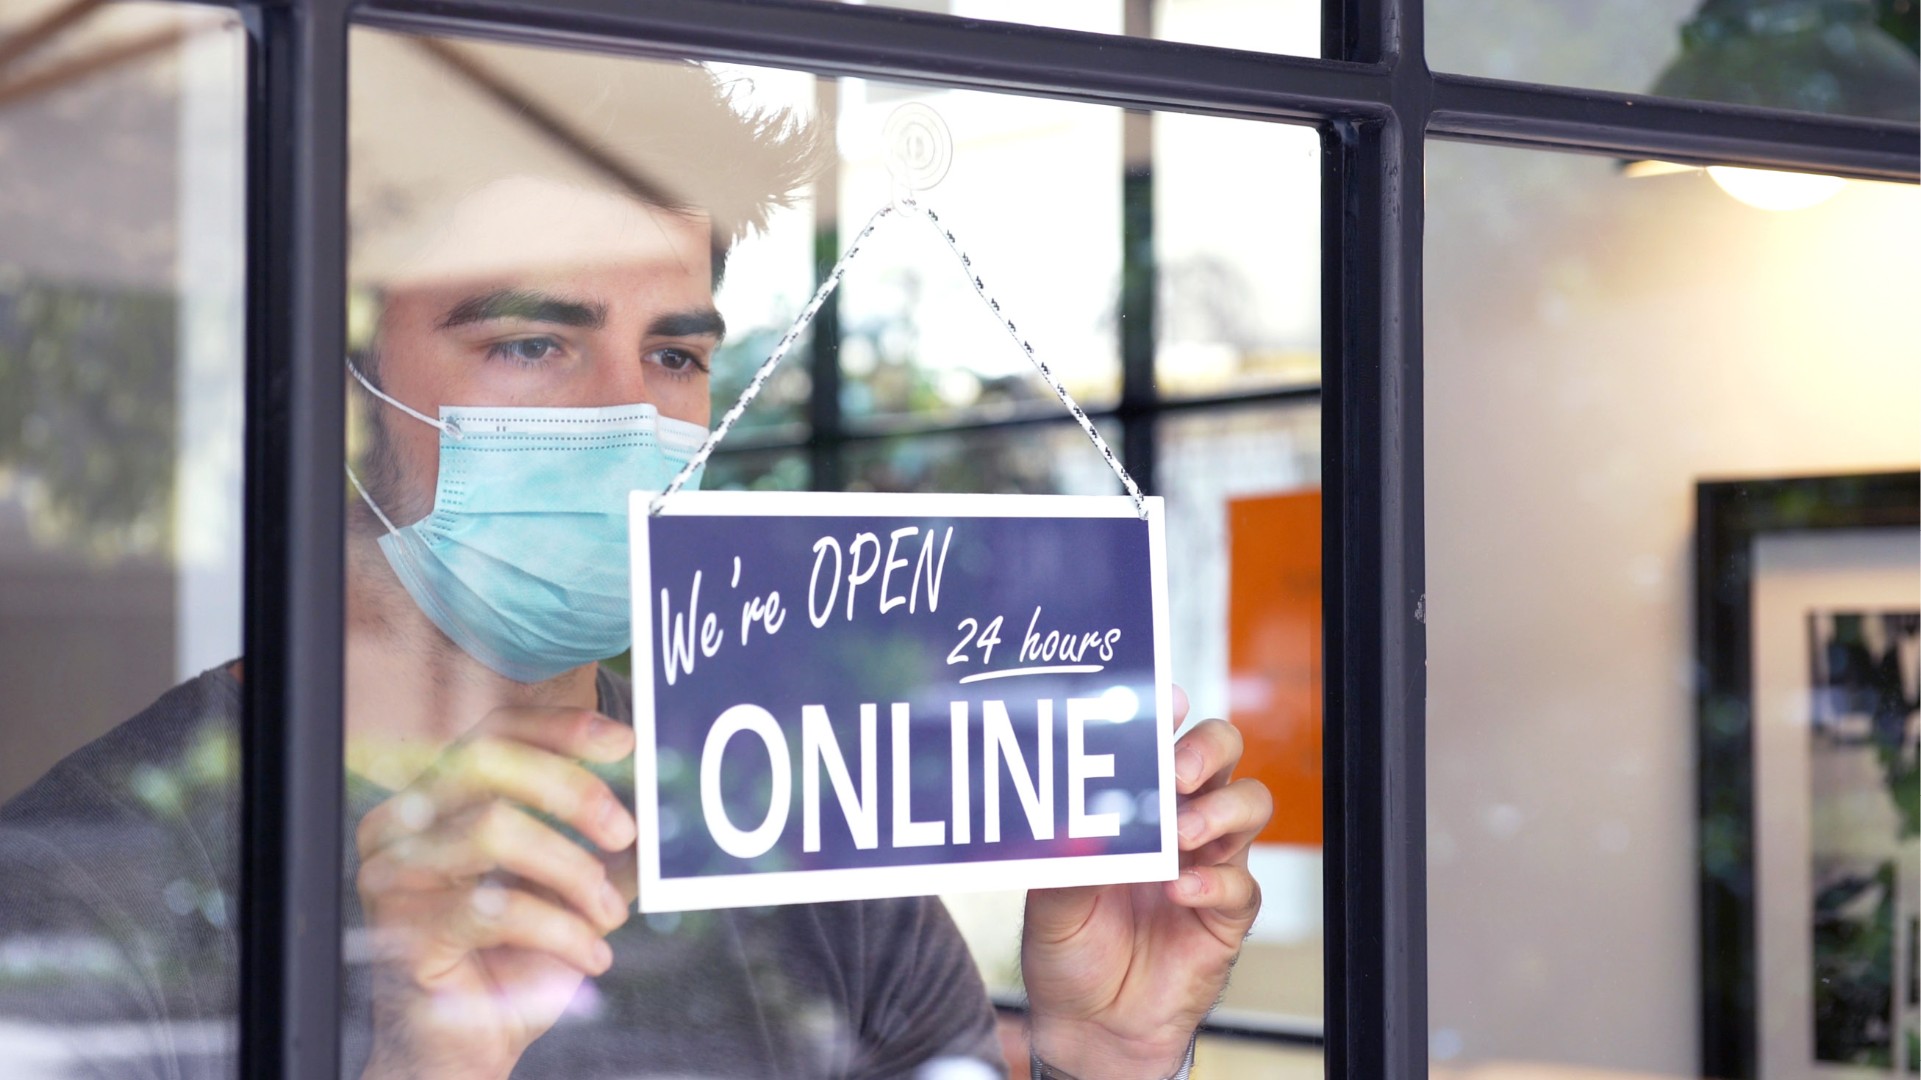 Young man with mask hangs sign on shop door: open 24 hours online